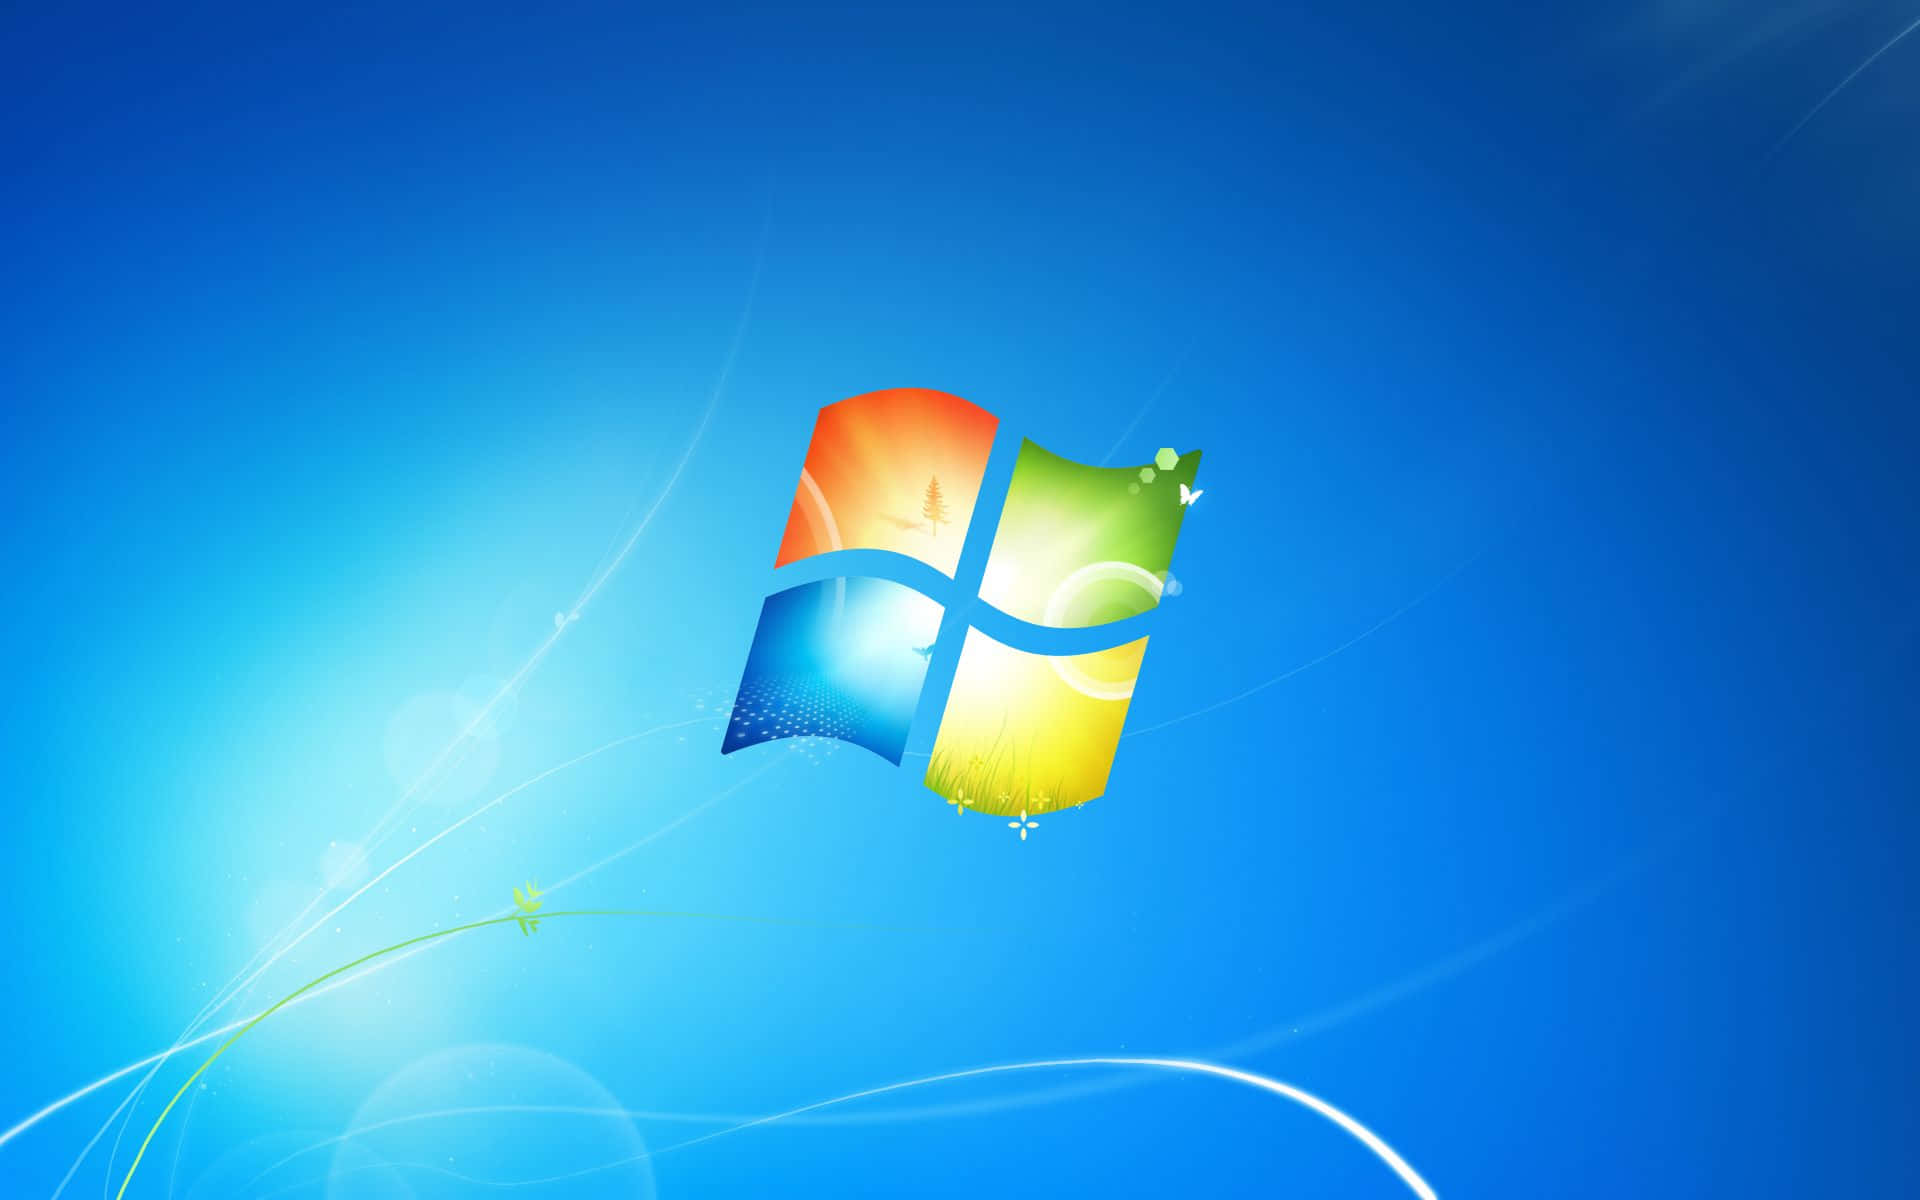 Windows 7 Logo On A Blue Background